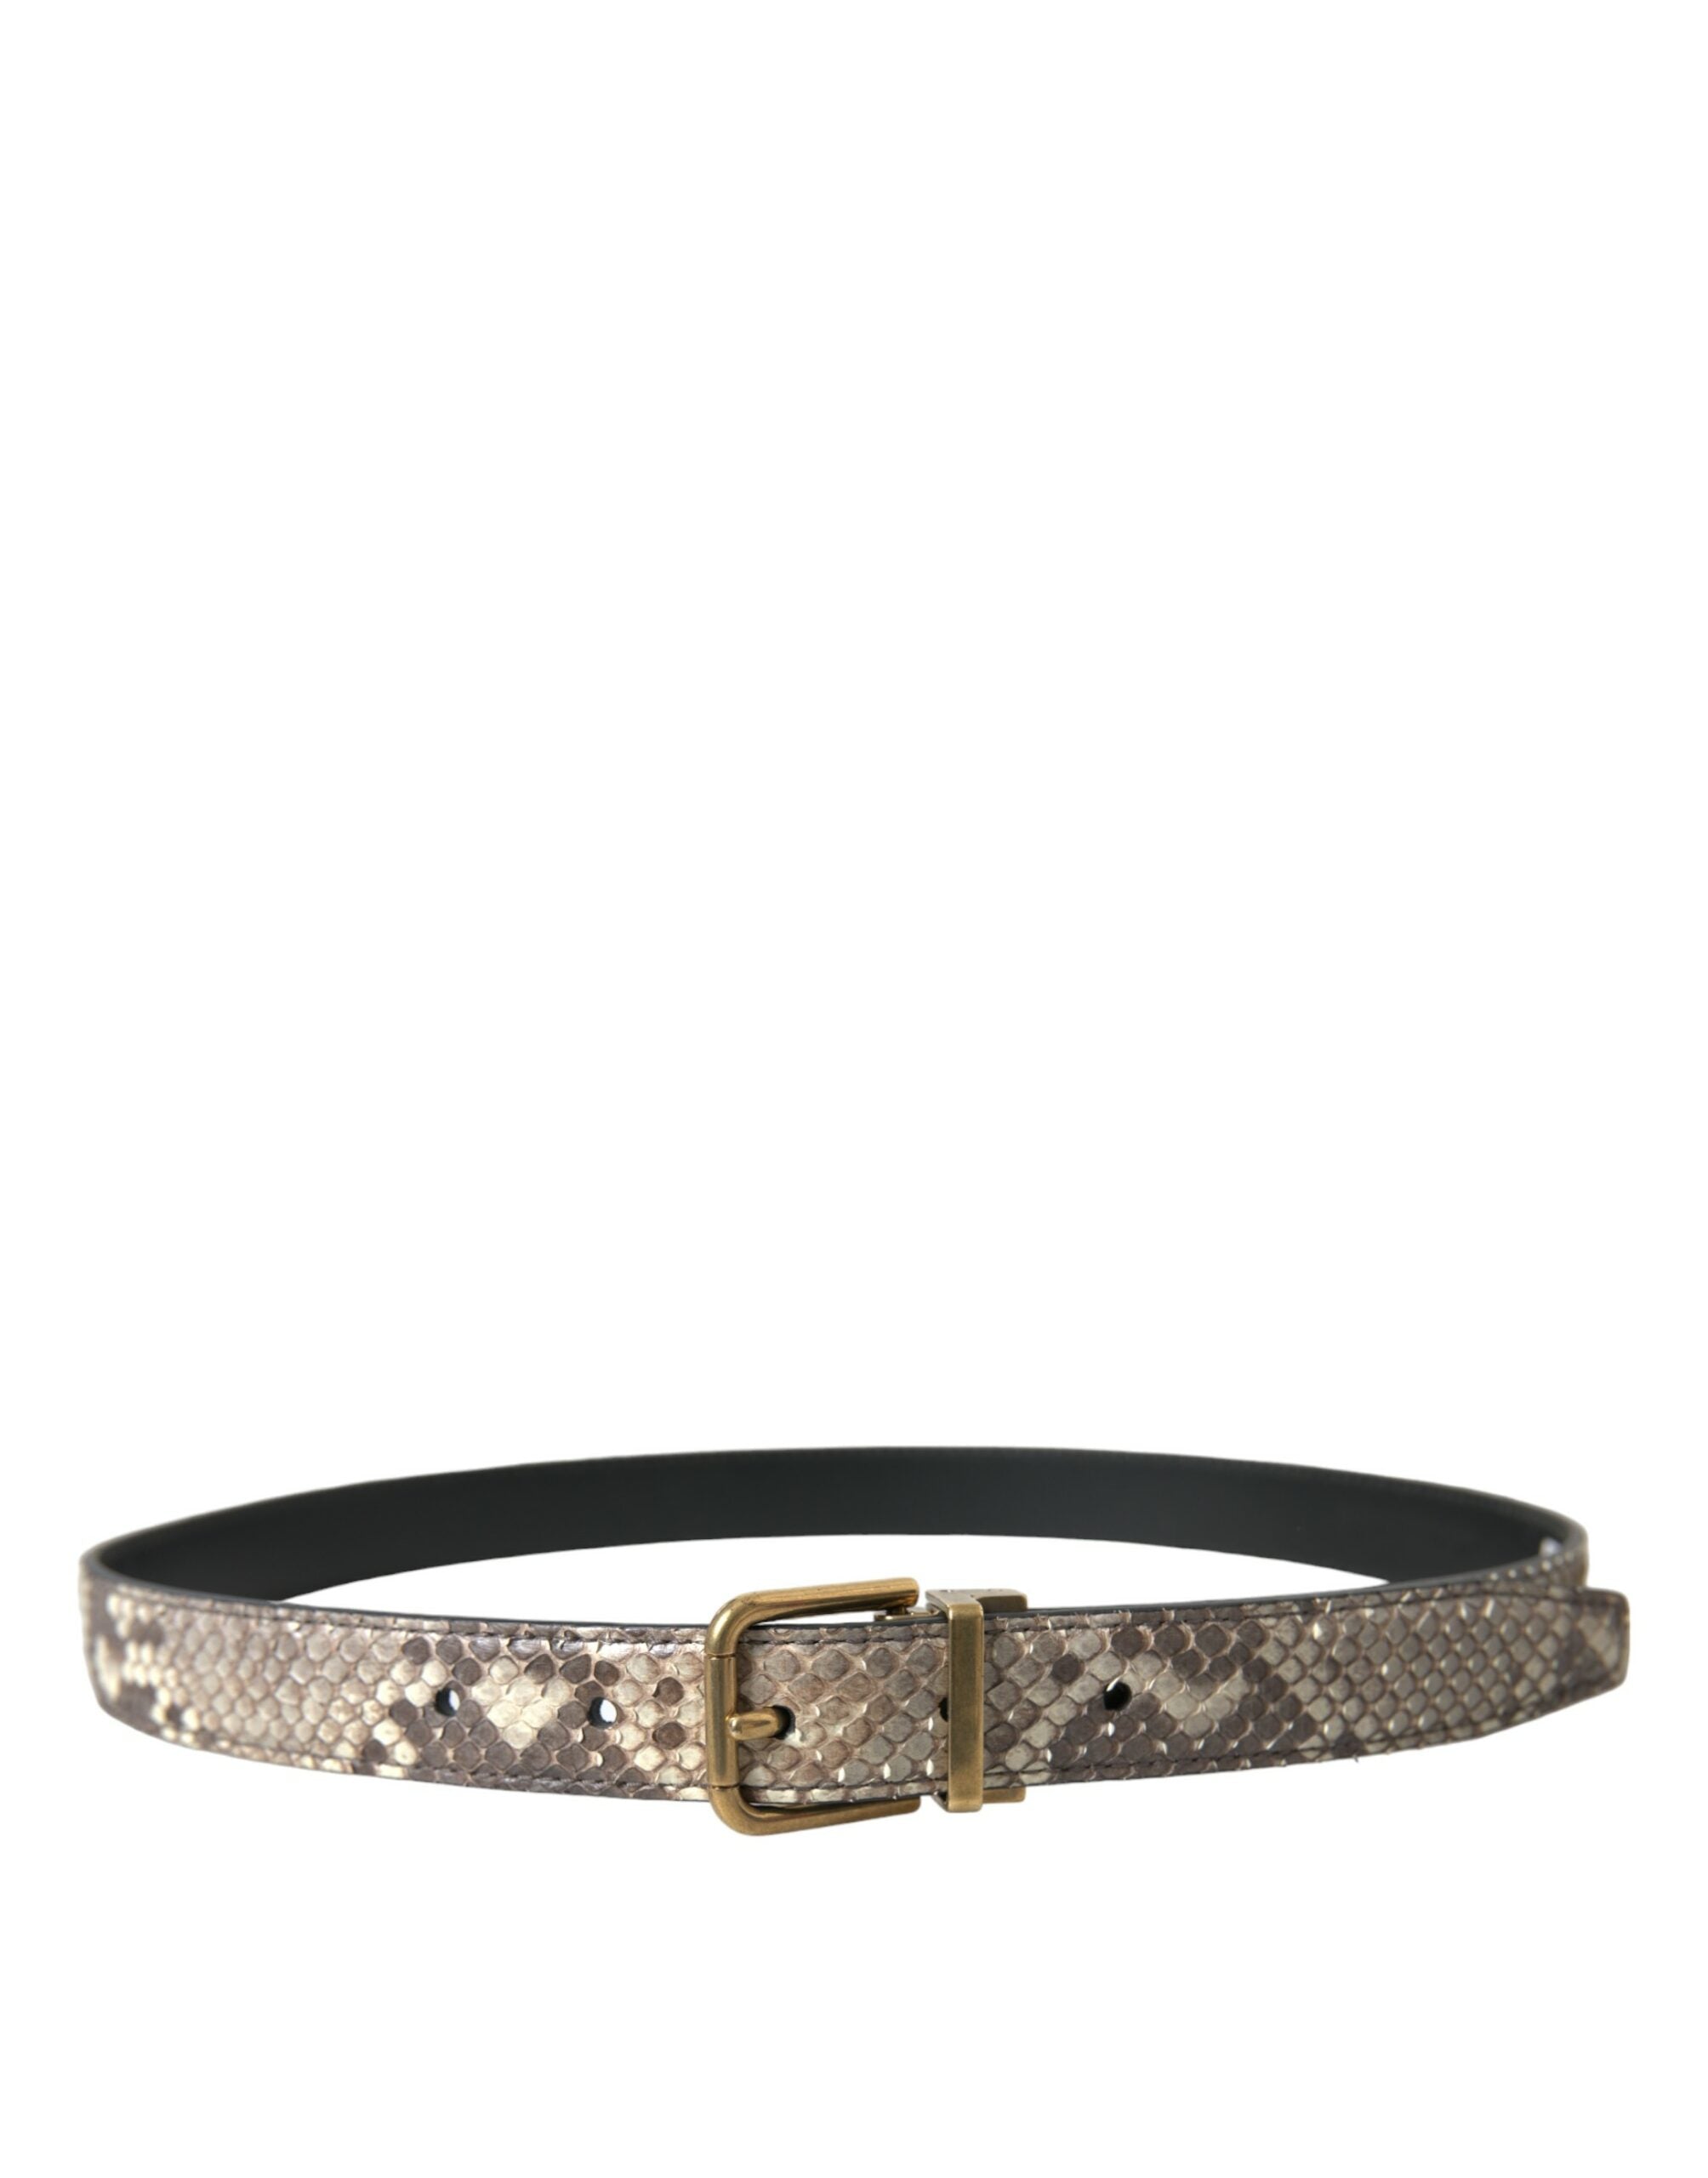 Dolce & Gabbana Elegant Italian Leather Belt